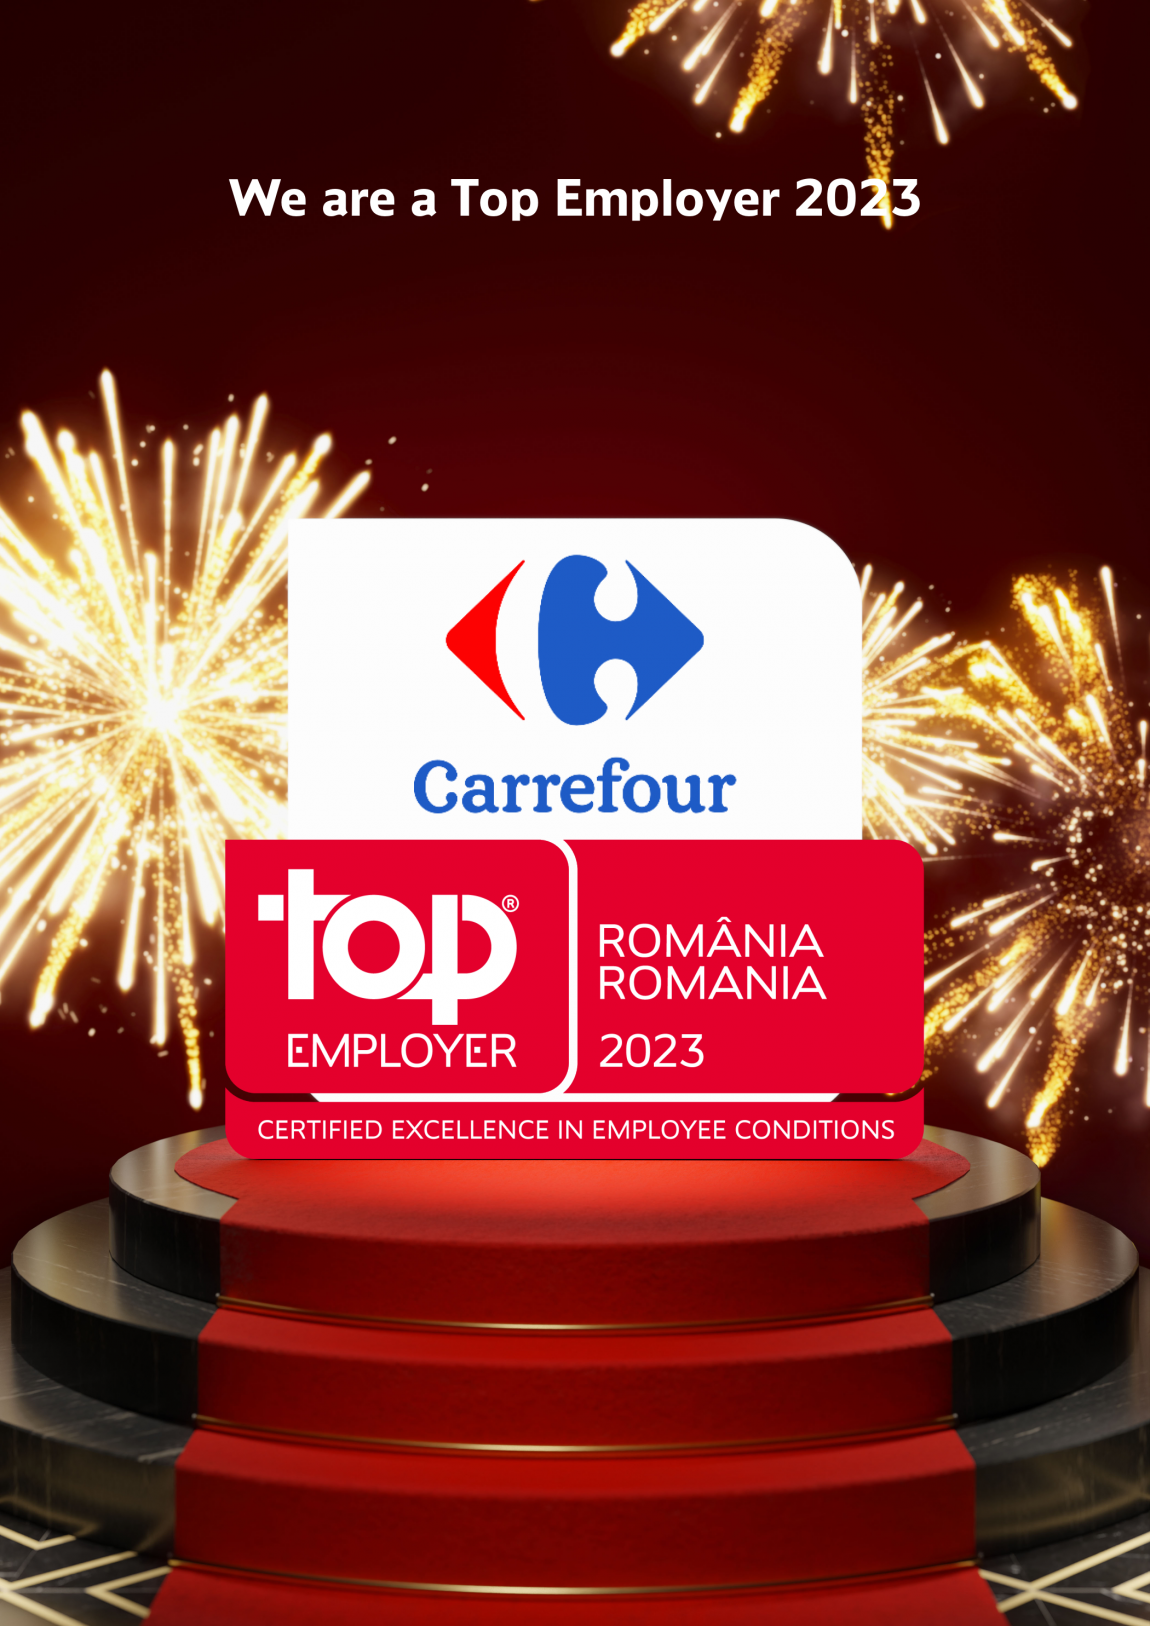  Carrefour Romania